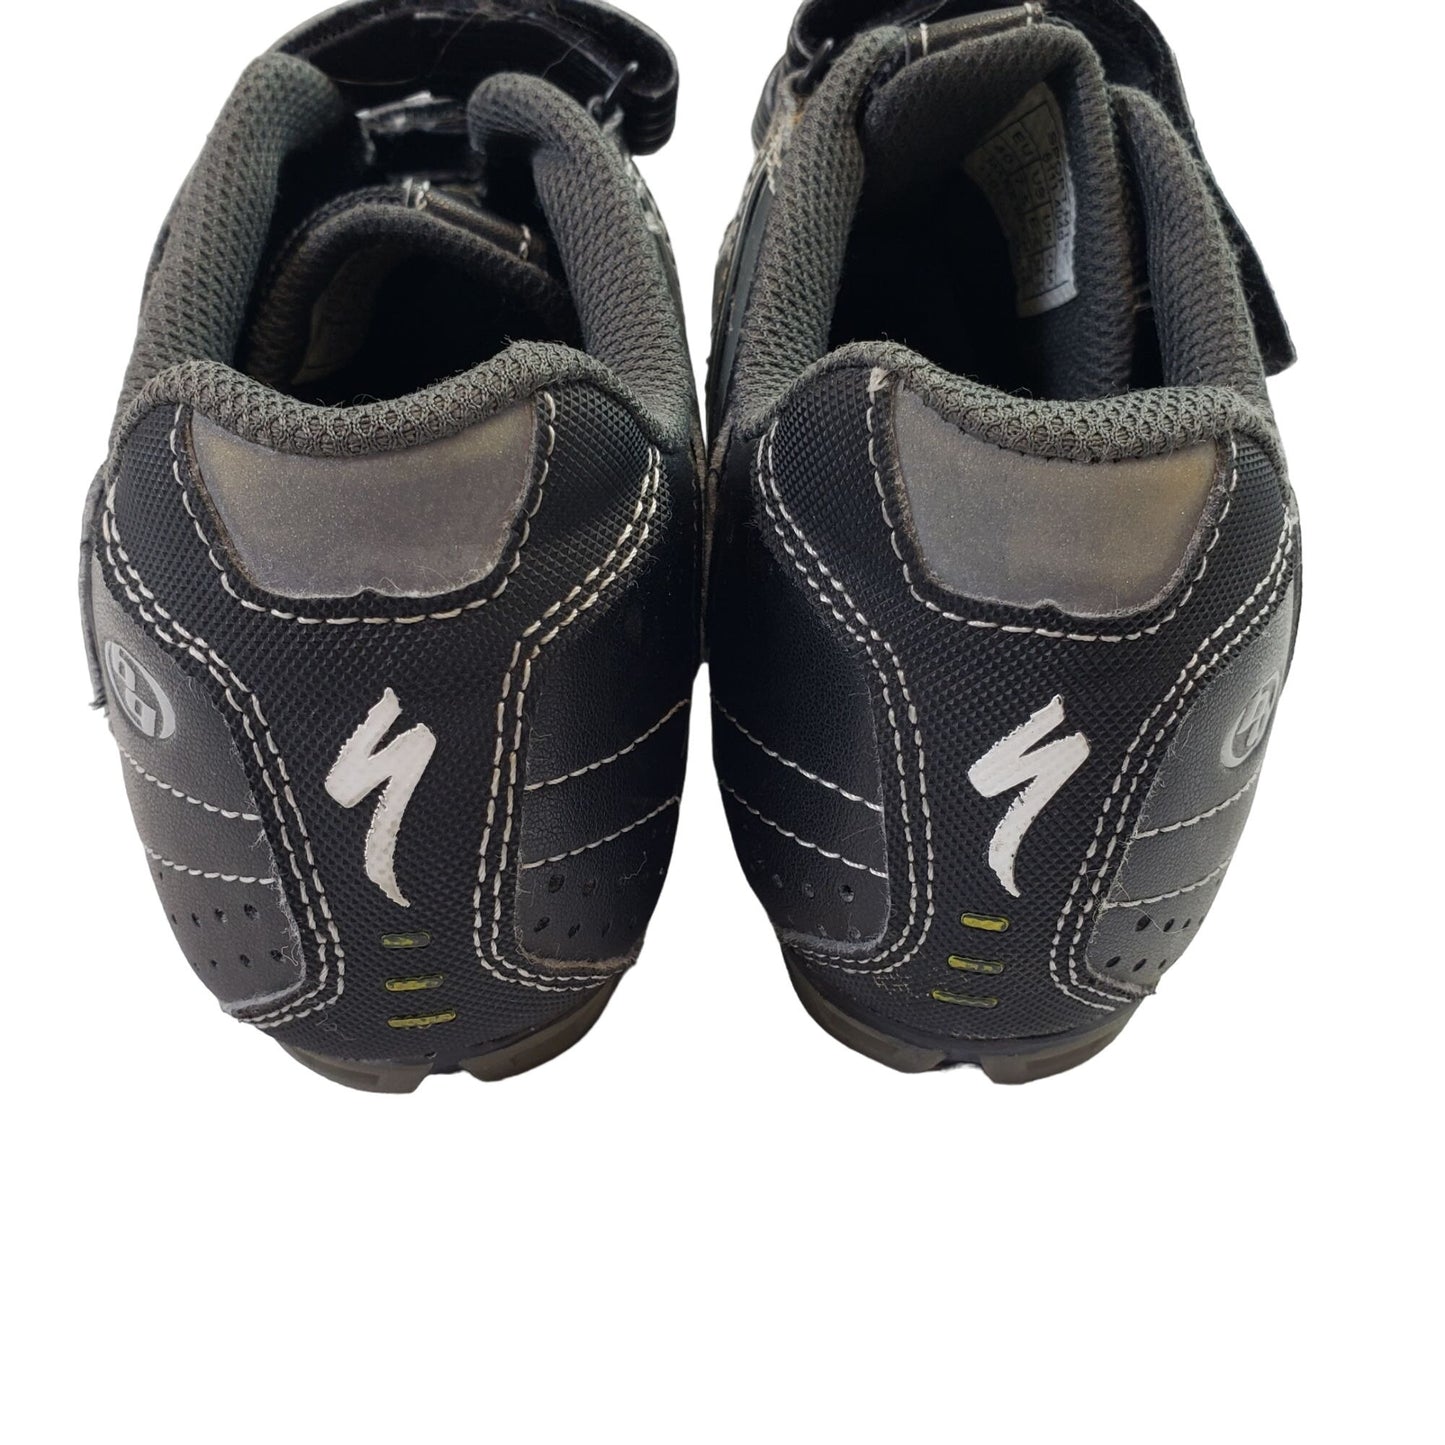 Specialized Men's Sport MTB Cycling Biking Shoes Size 40